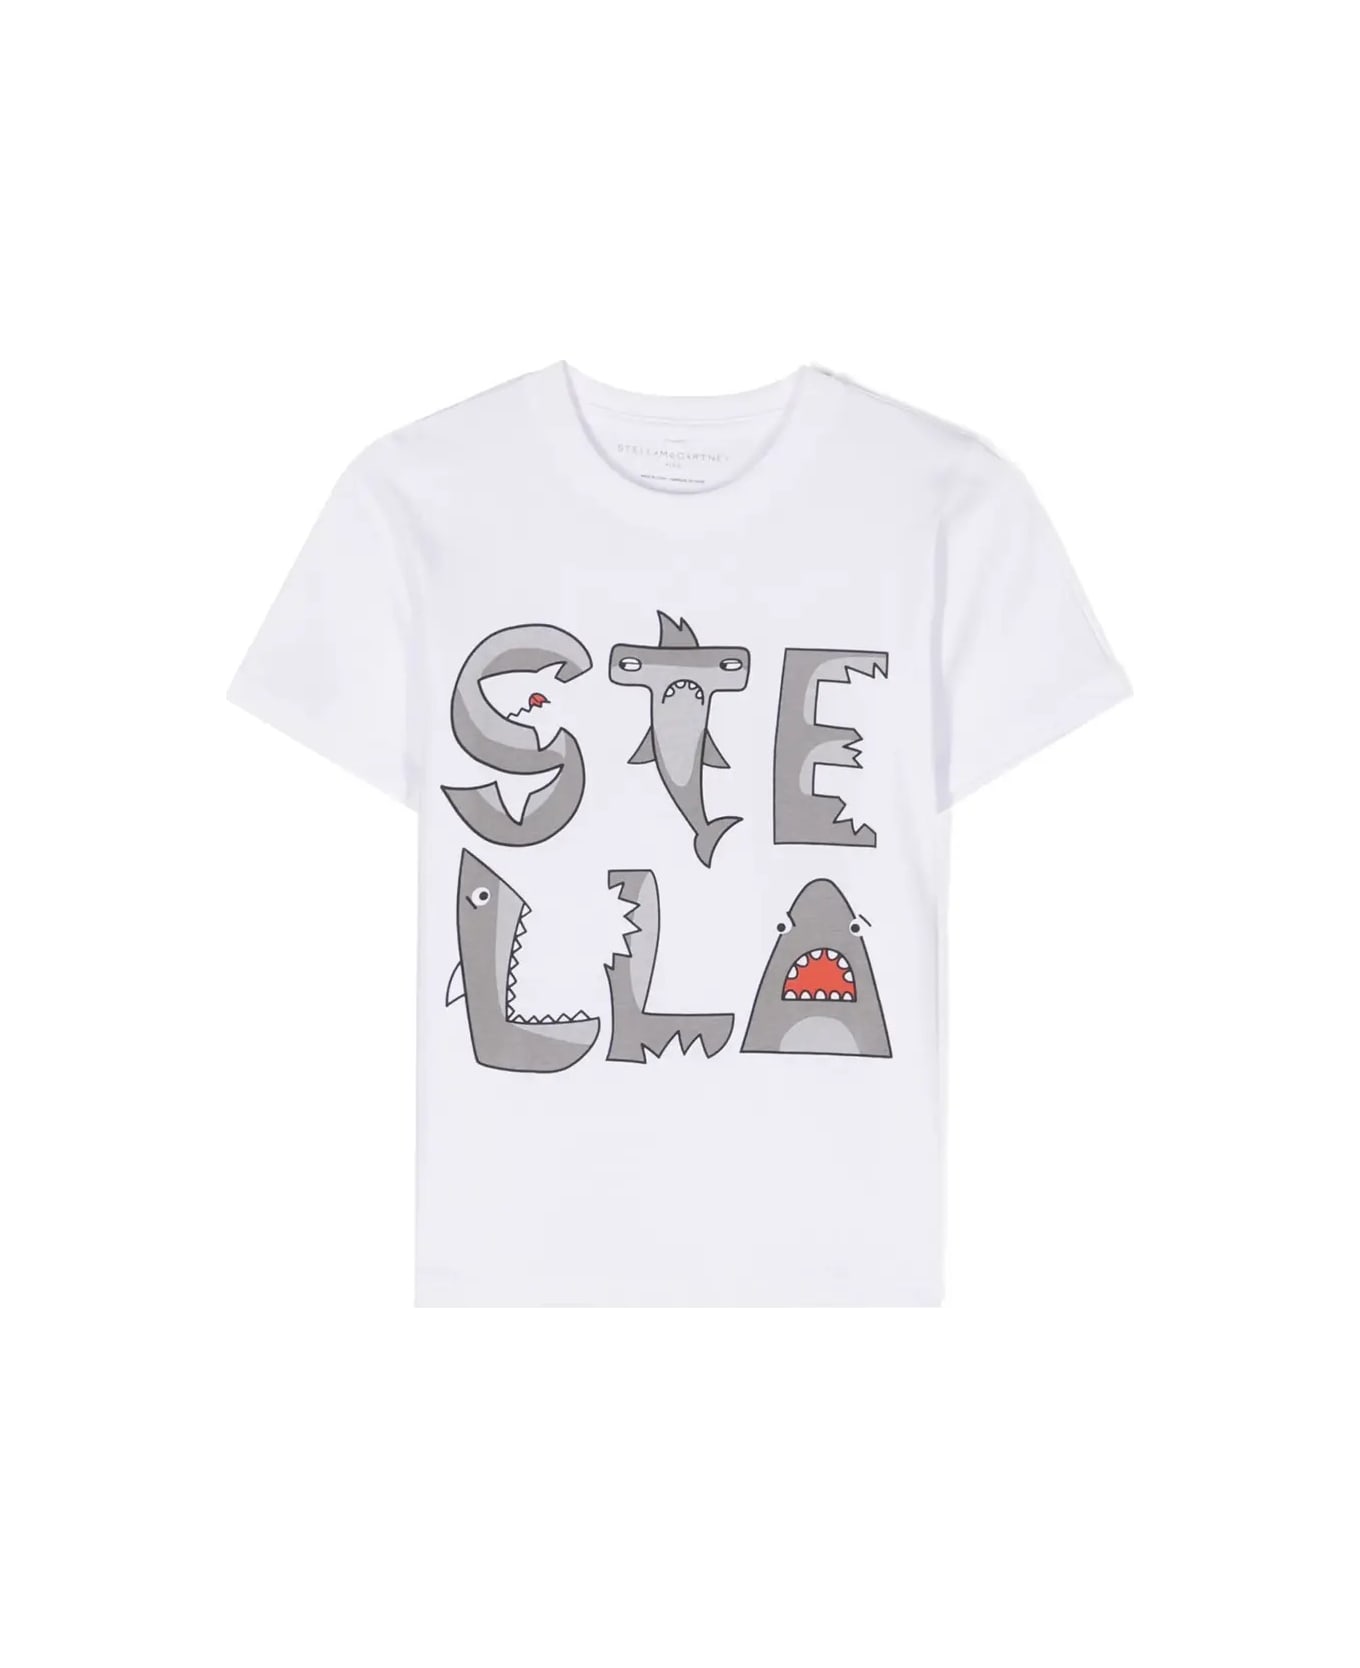 Stella McCartney Kids "stella" Shark Print T-shirt In White - White